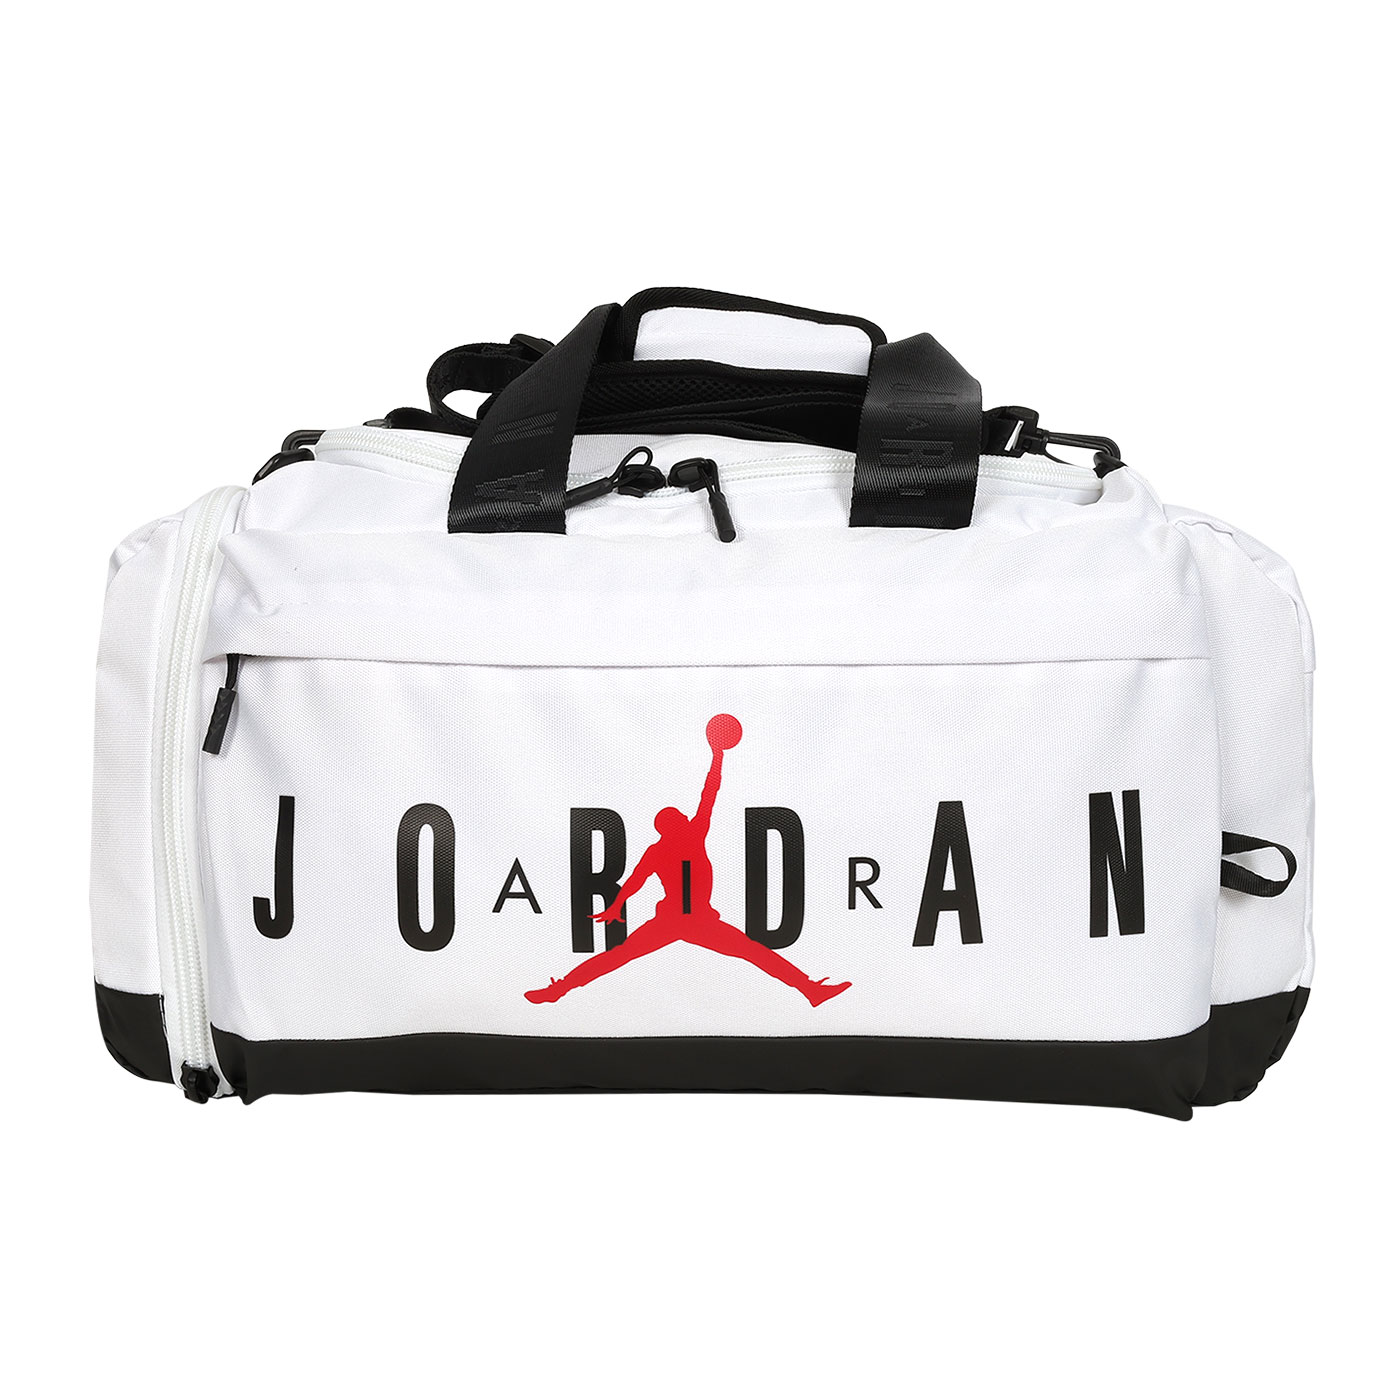 NIKE JORDAN S 行李包  JD2423006AD-002 - 白黑紅